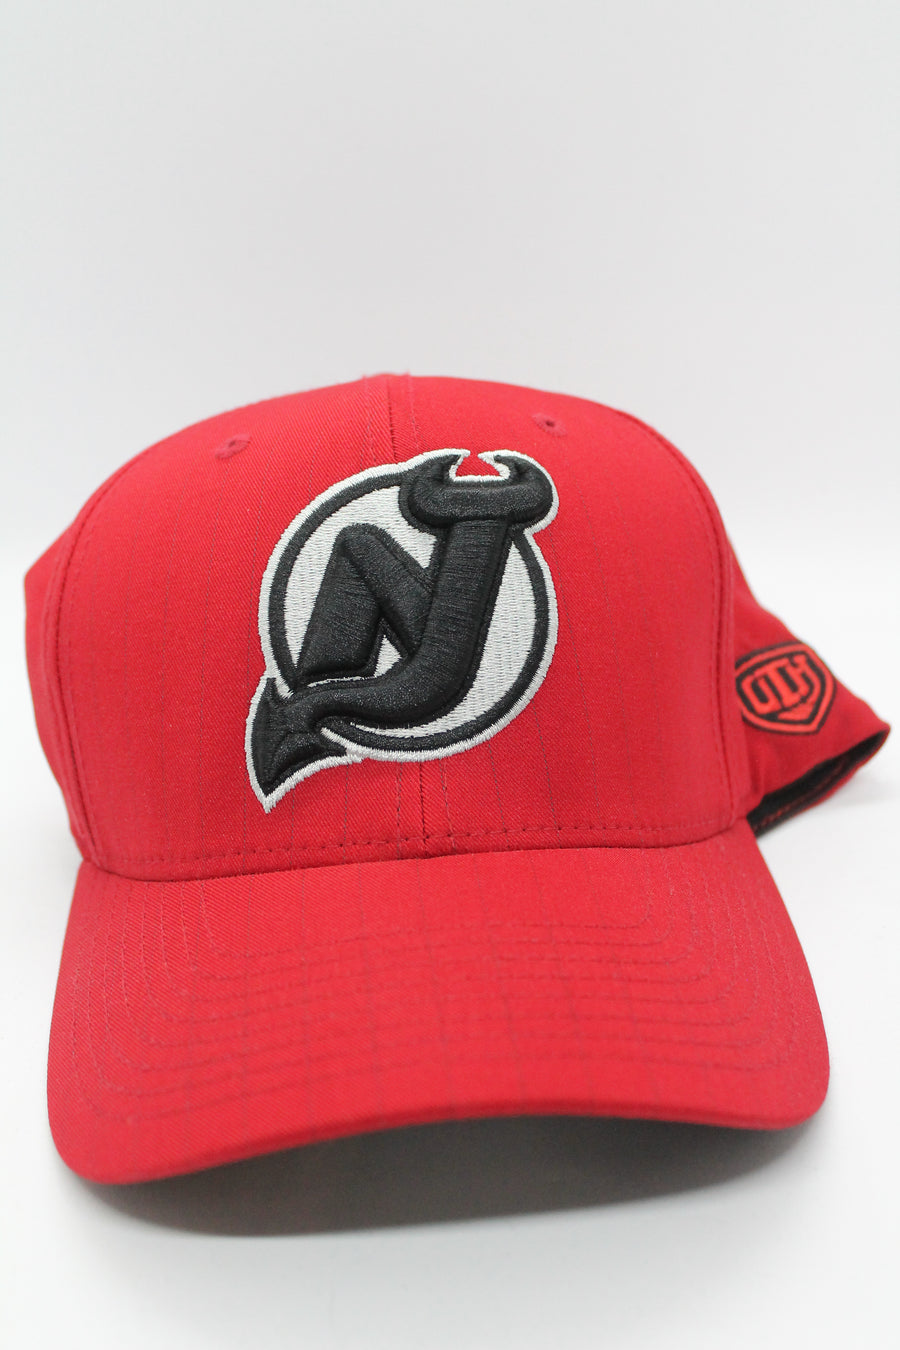 NHL New Jersey Devils OTH Pinstripe Red/Black Hat